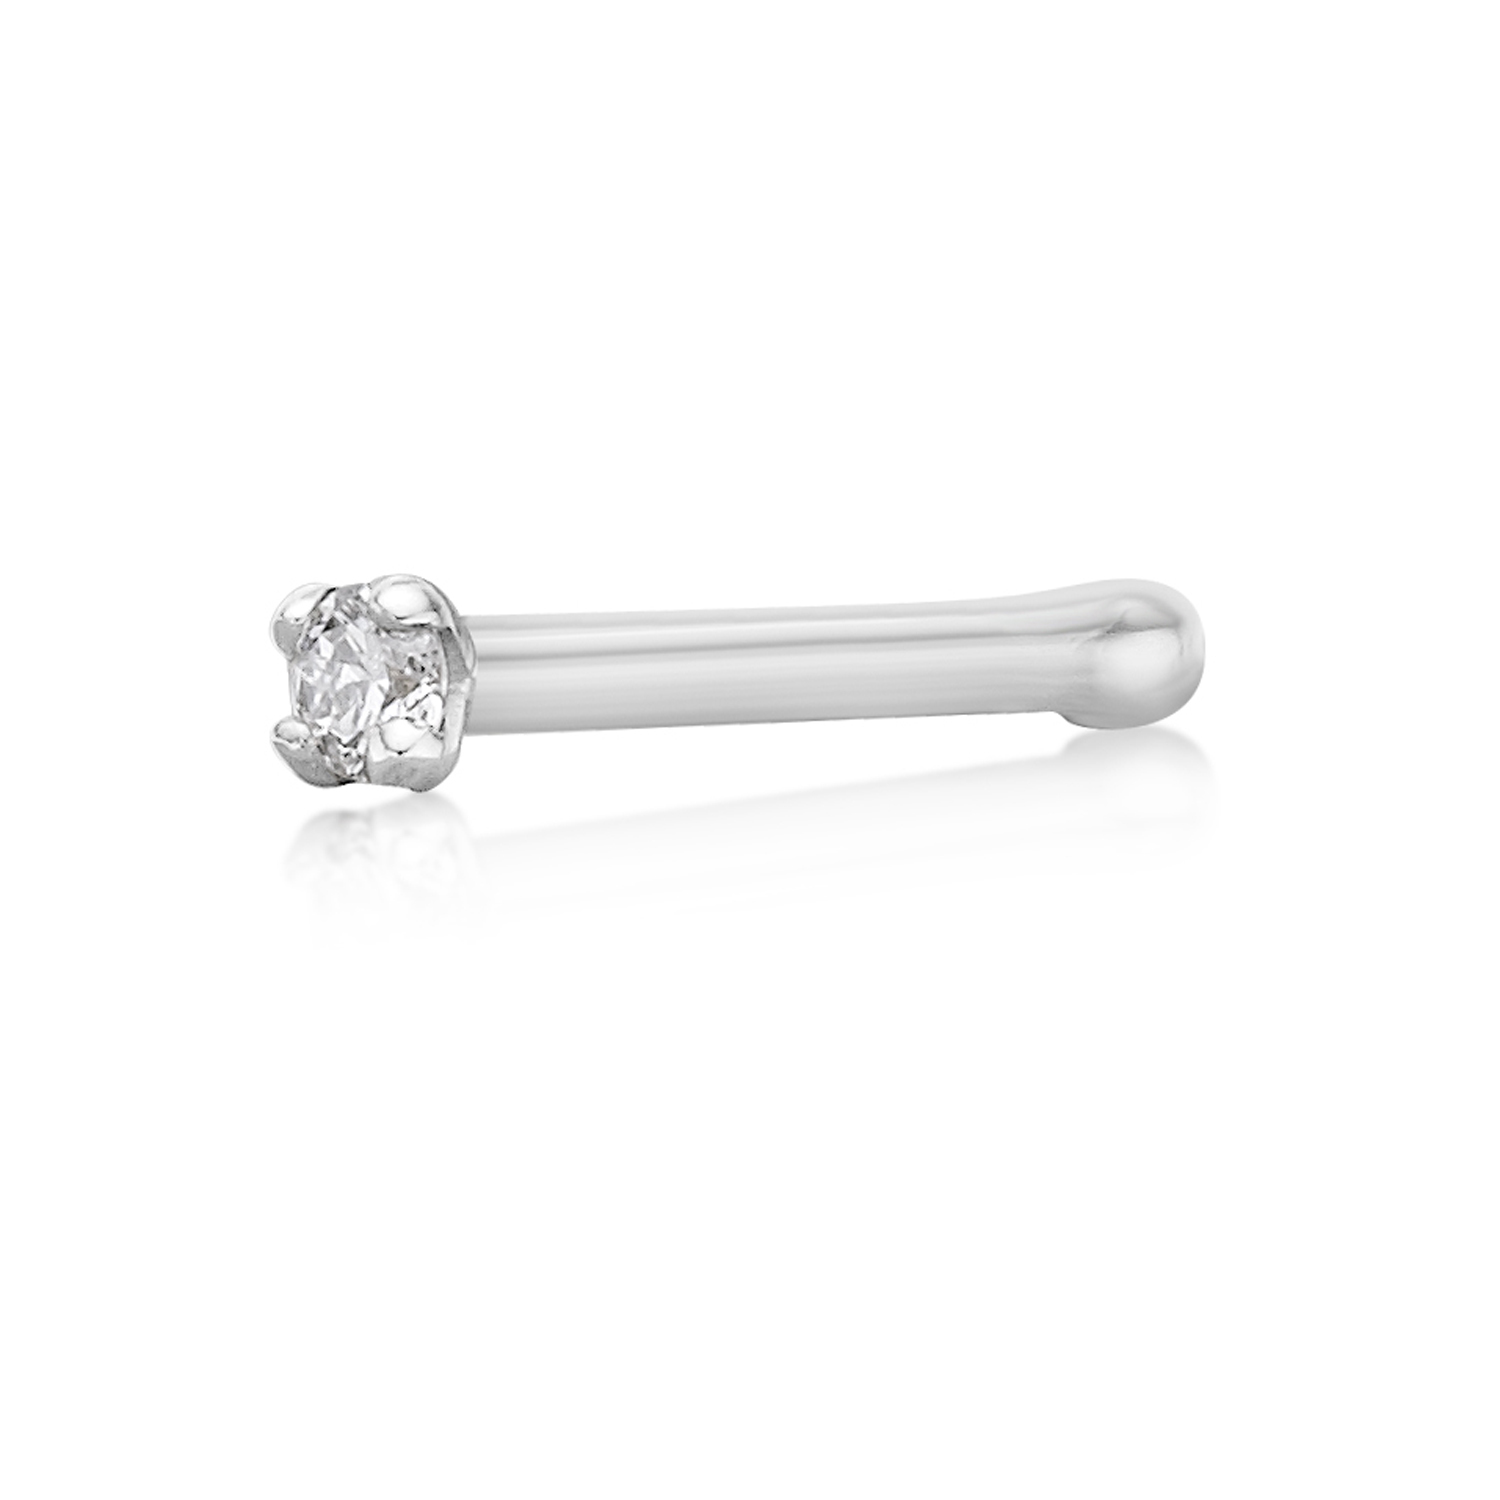 49900-nose-ring-the-piercer-white-gold-white-diamonds-0-01-h-i2-i3-49900-3.jpg